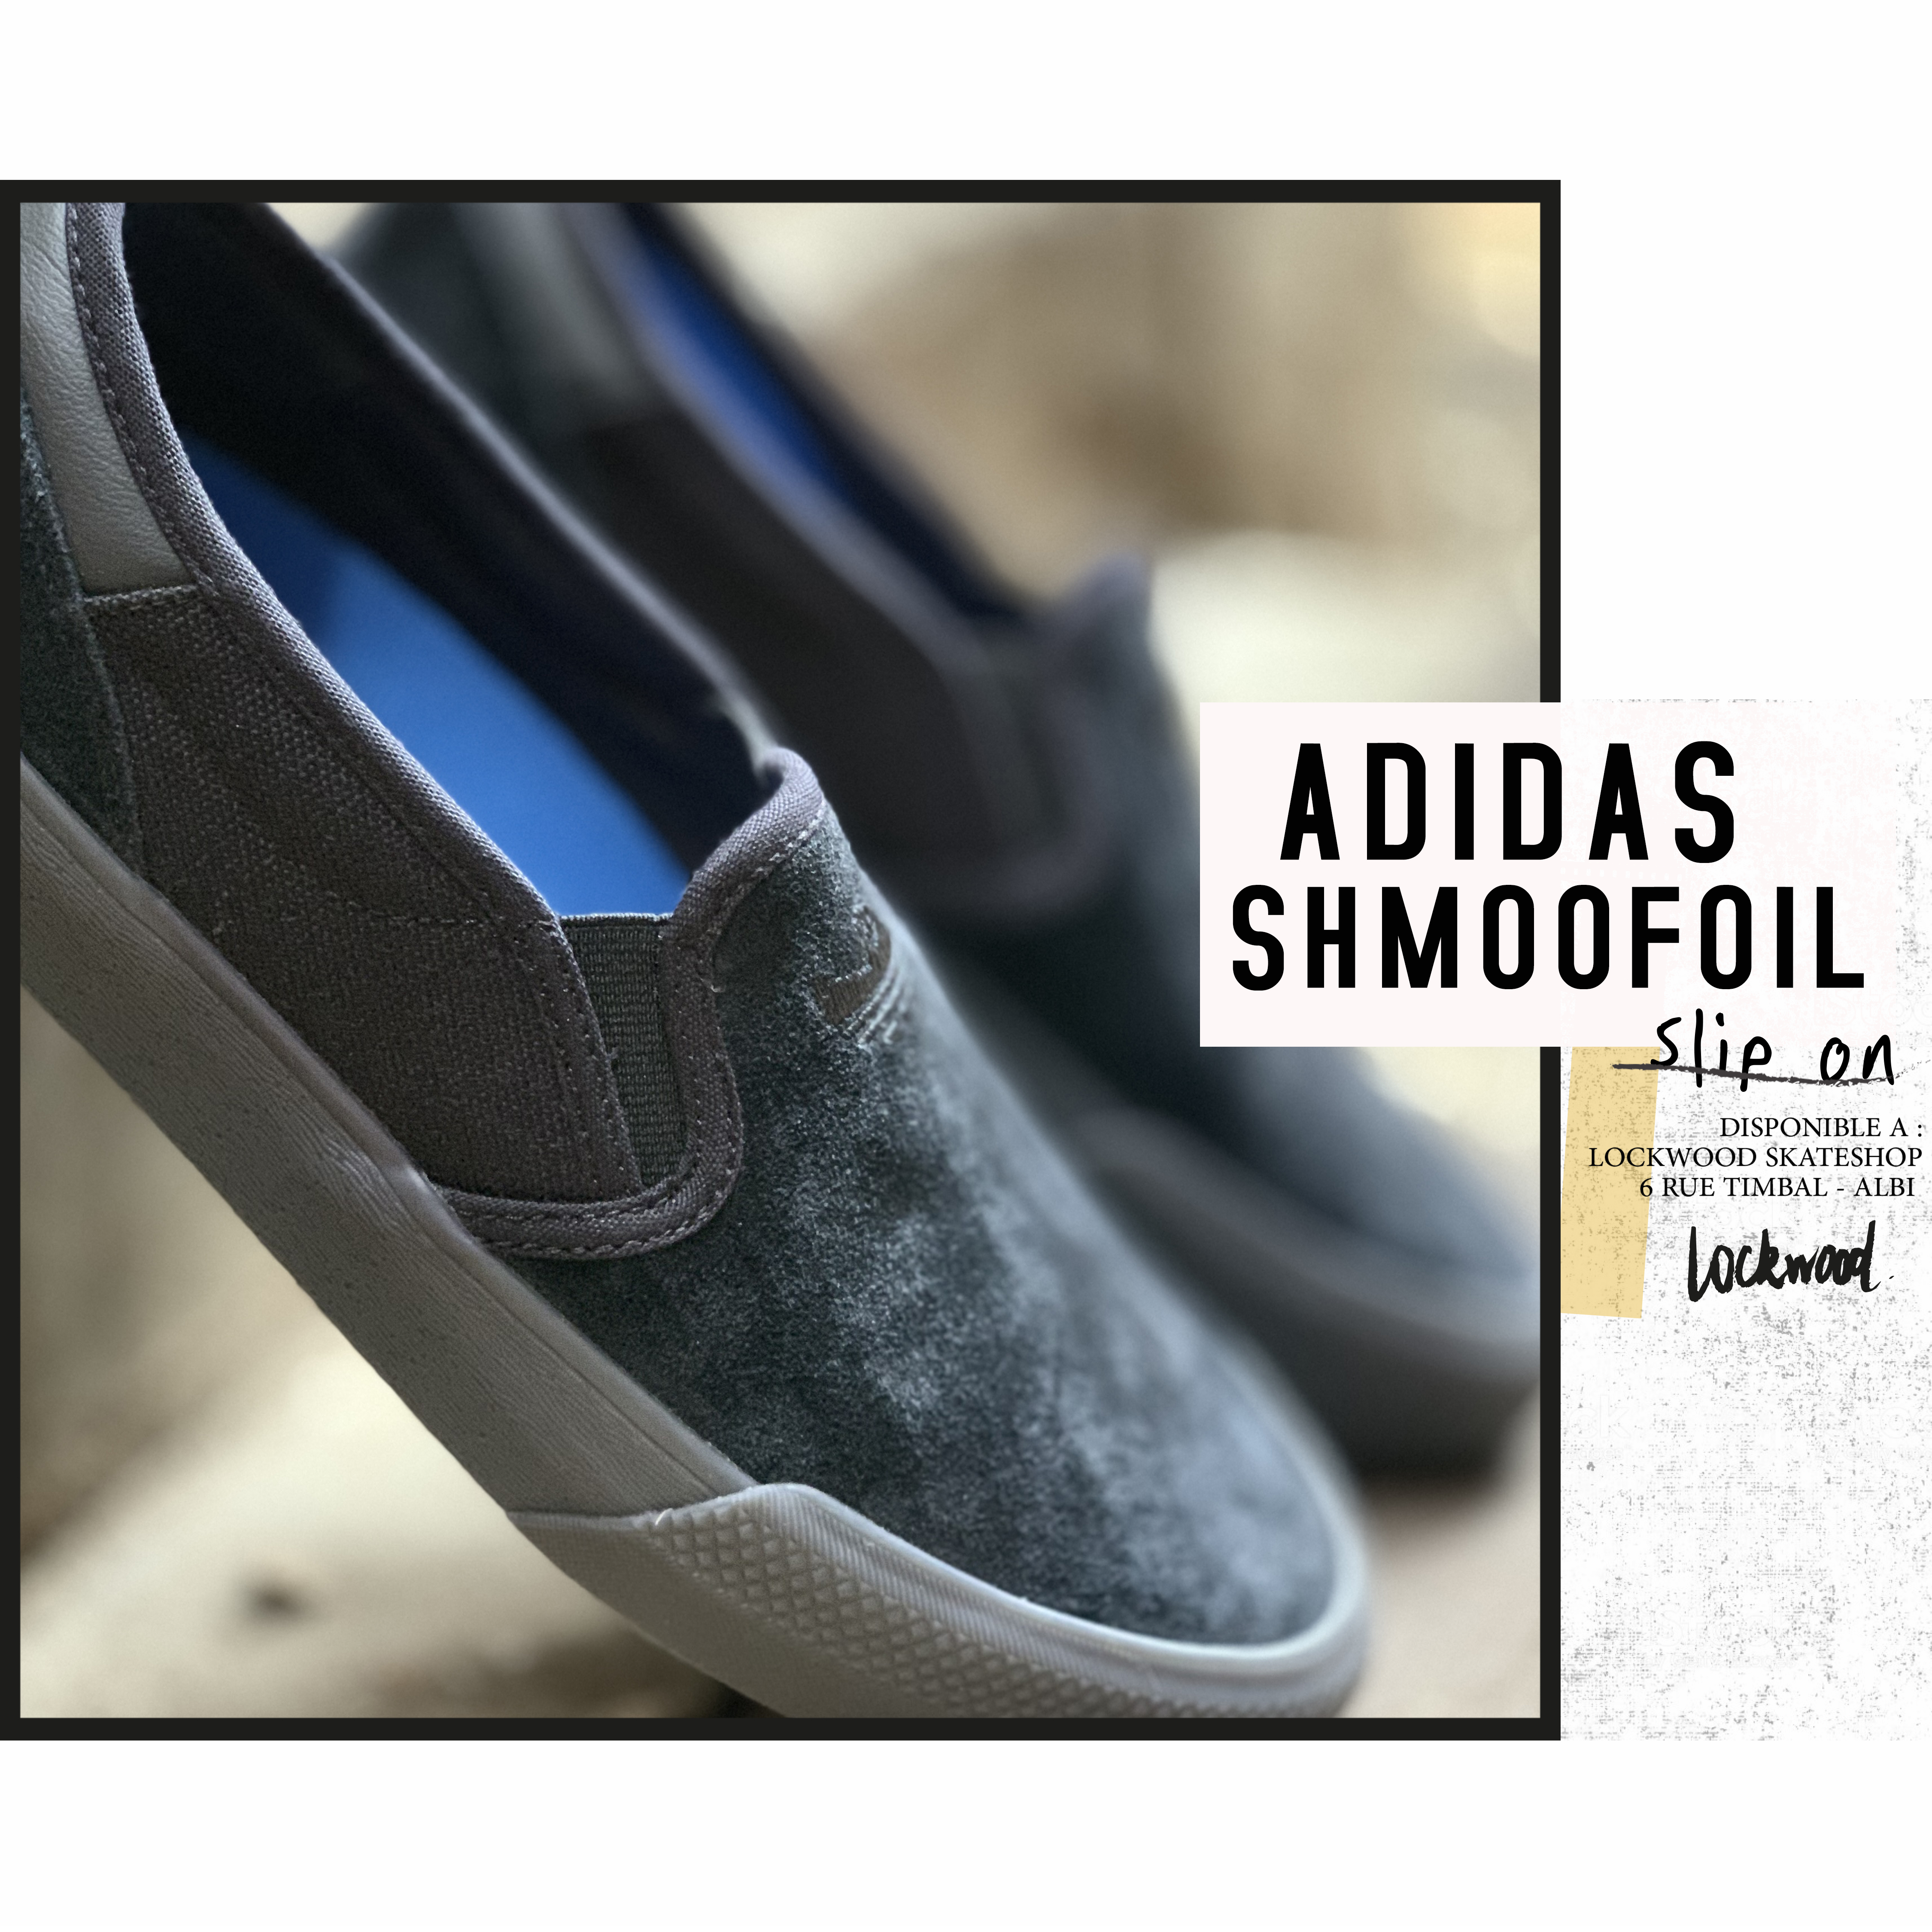 SHMOOFOIL SLIP ON ADIDAS ALBI LOCKWOOD SKATESHOP